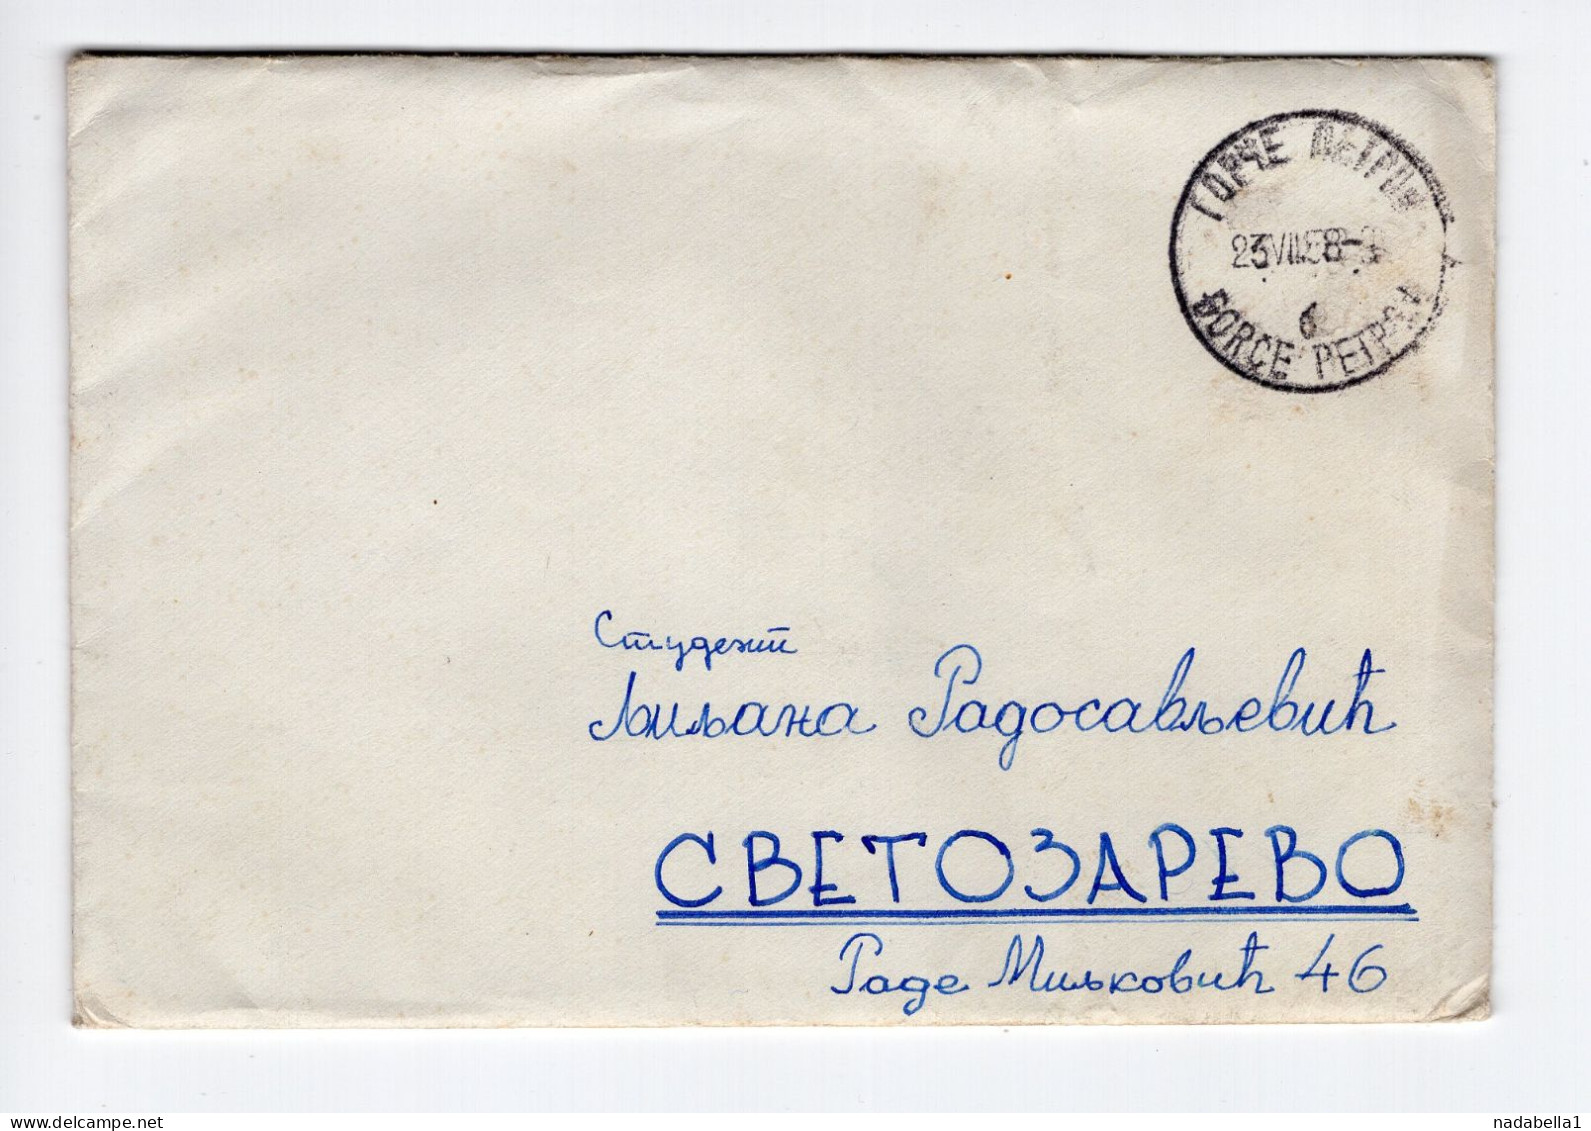 1958. YUGOSLAVIA,MACEDONIA,GORČE PETROV COVER TO SVETOZAREVO,NO STAMP,30 POSTAGE DUE APPLIED - Portomarken